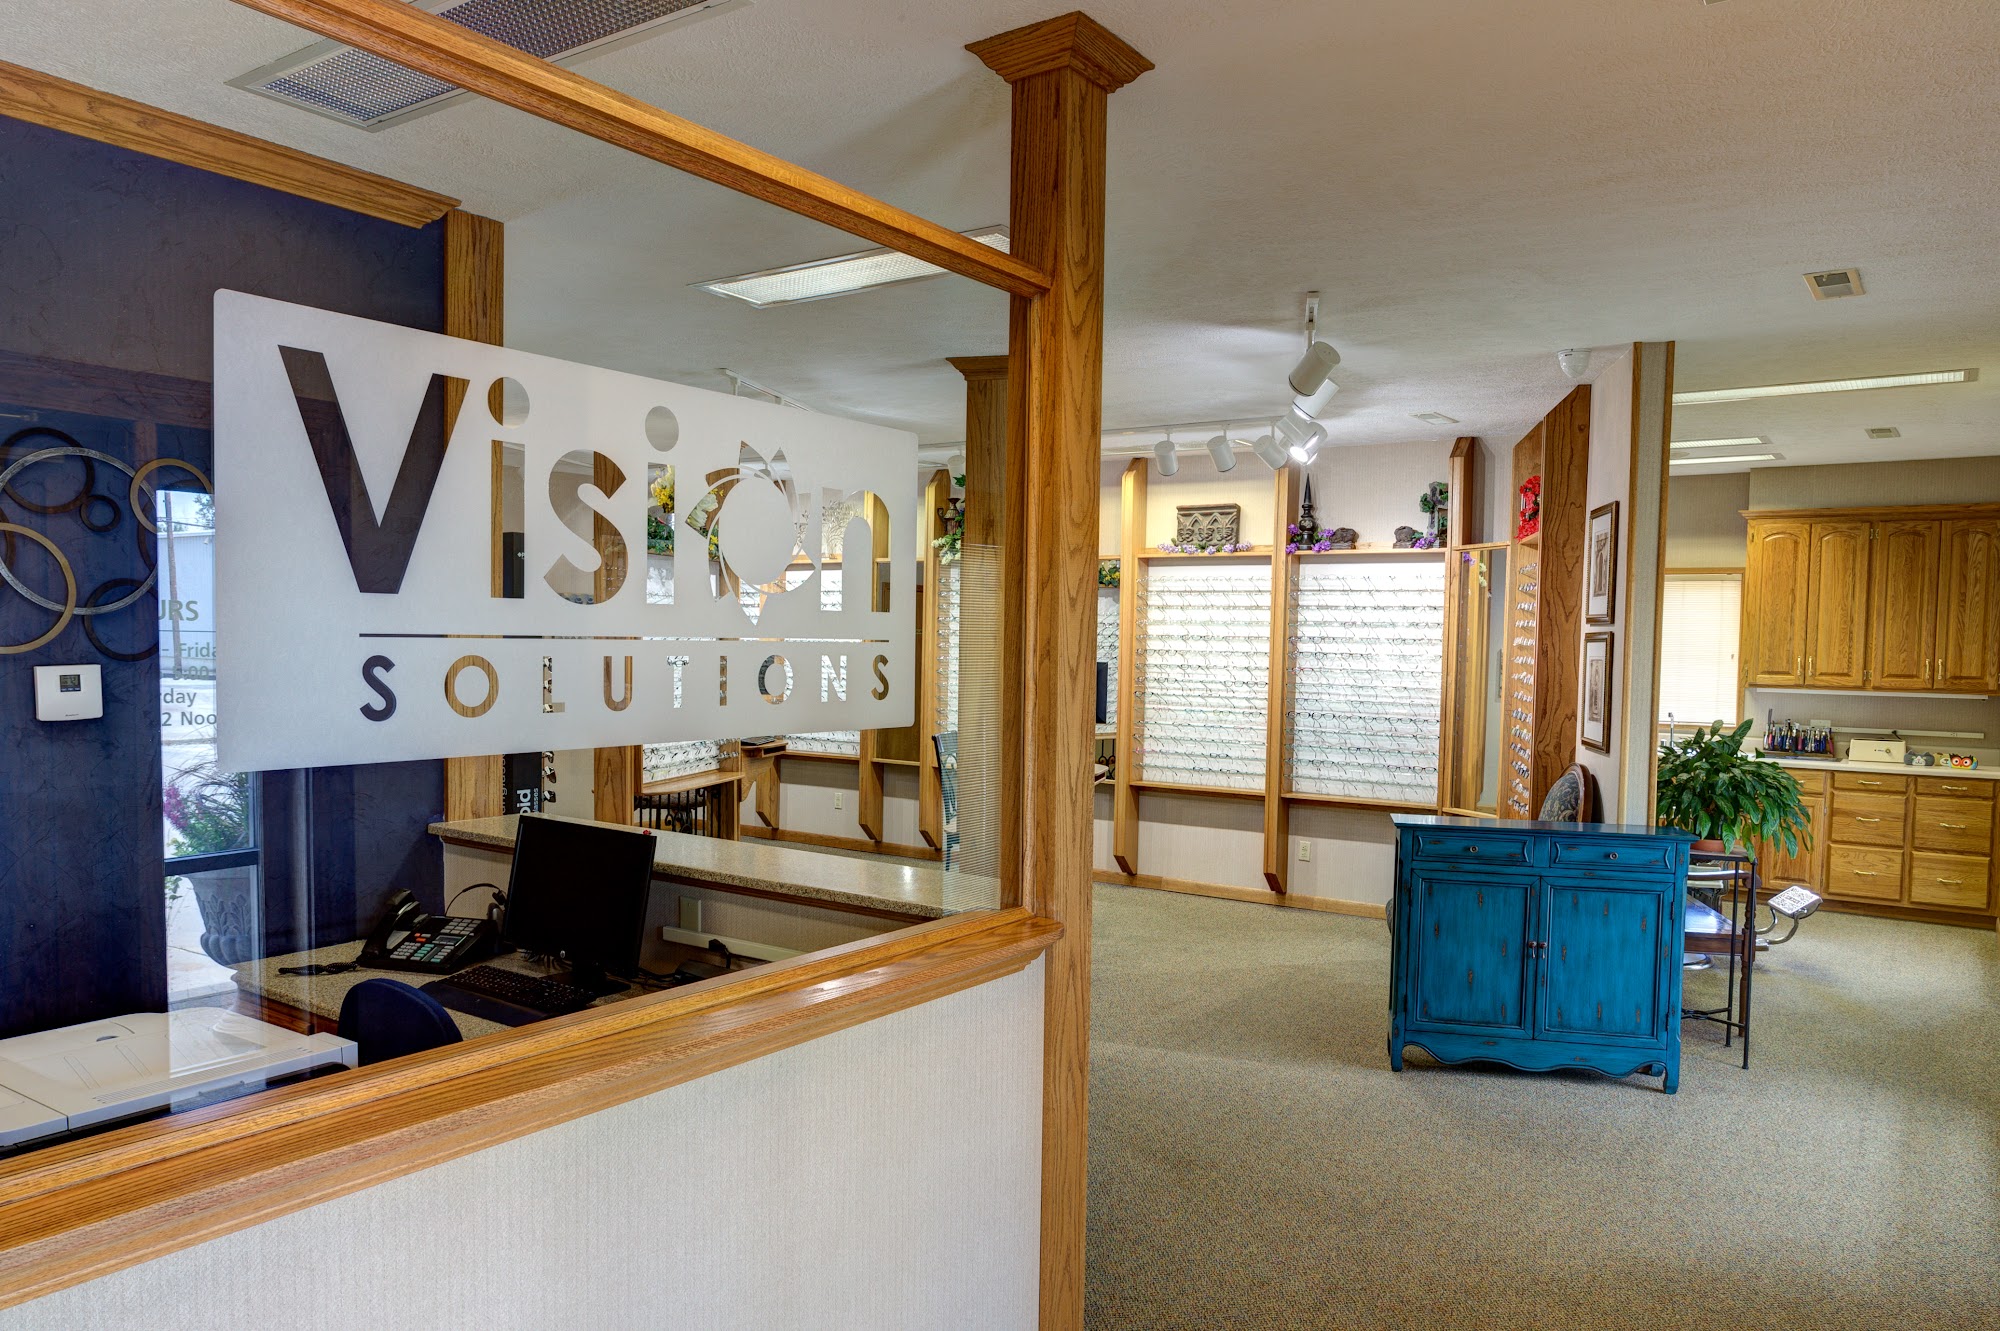 Vision Solutions 808 Gulf St, Lamar Missouri 64759